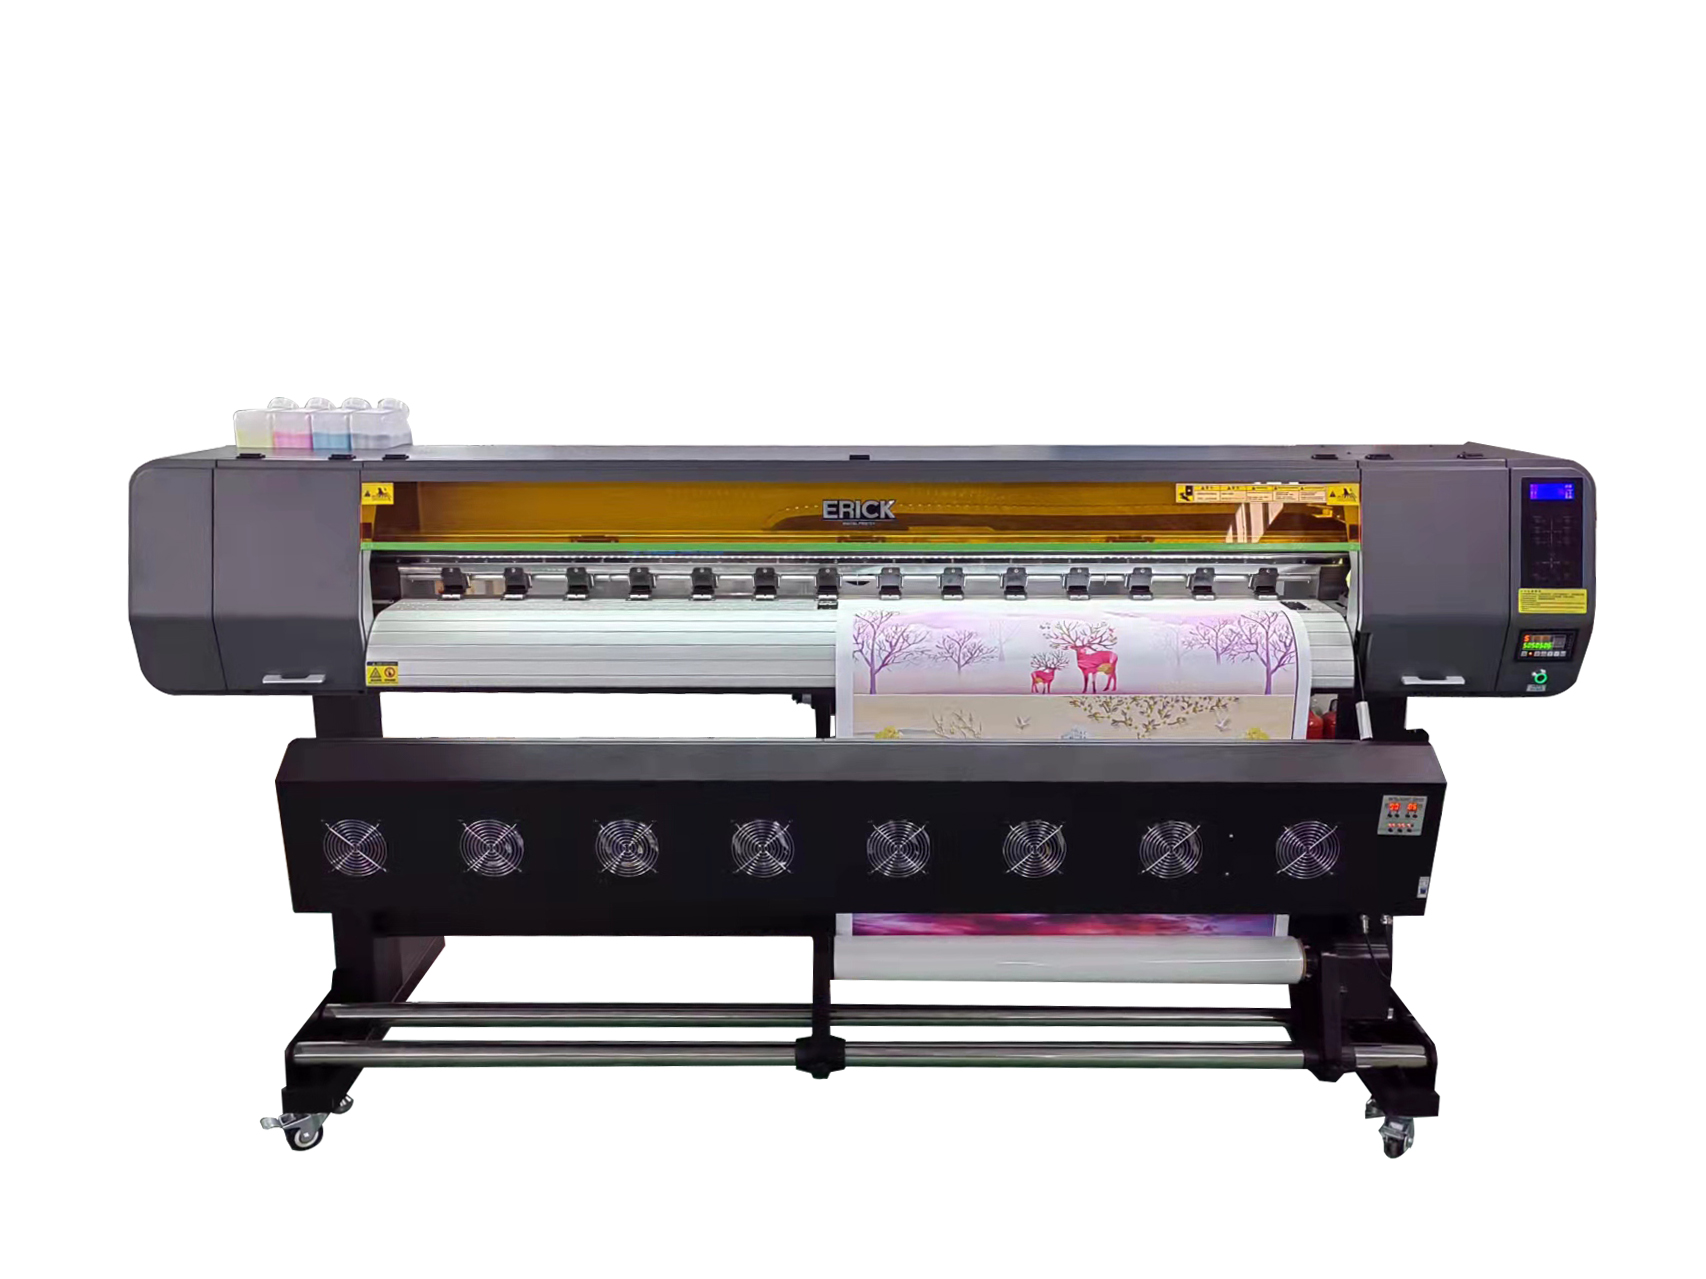 OEM EP-I3200A1 eco solvent printer kanggo vinyl flex printing inkjet plotter 1.8m